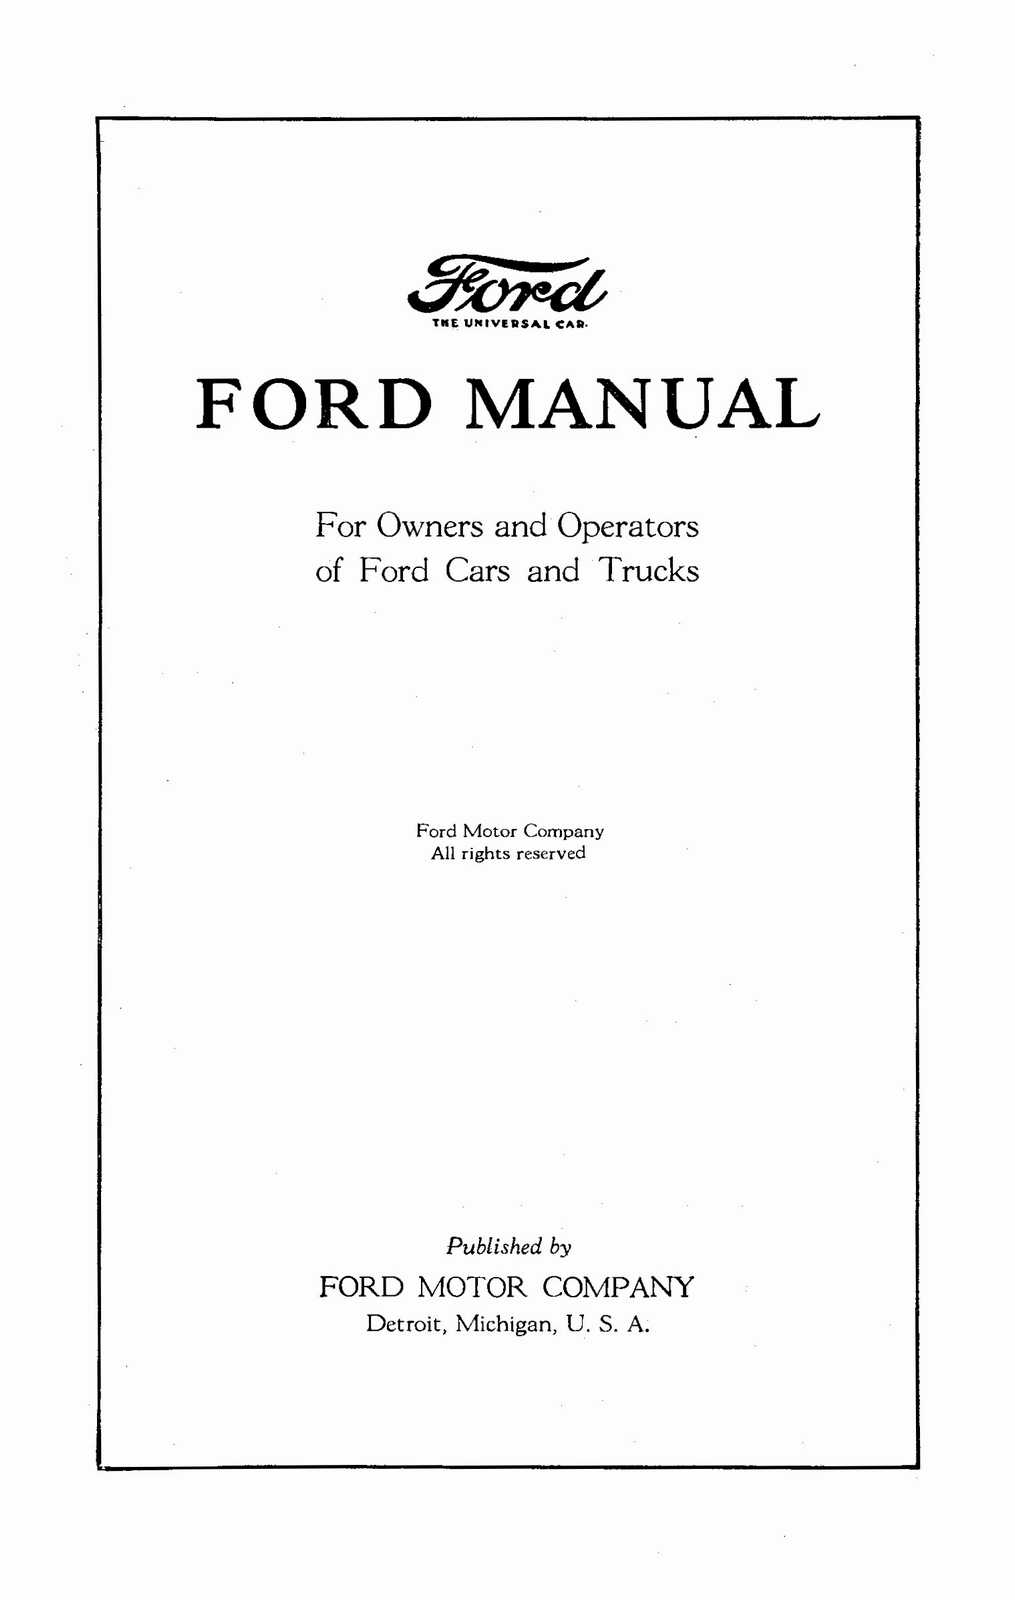 n_1925 Ford Owners Manual-01.jpg